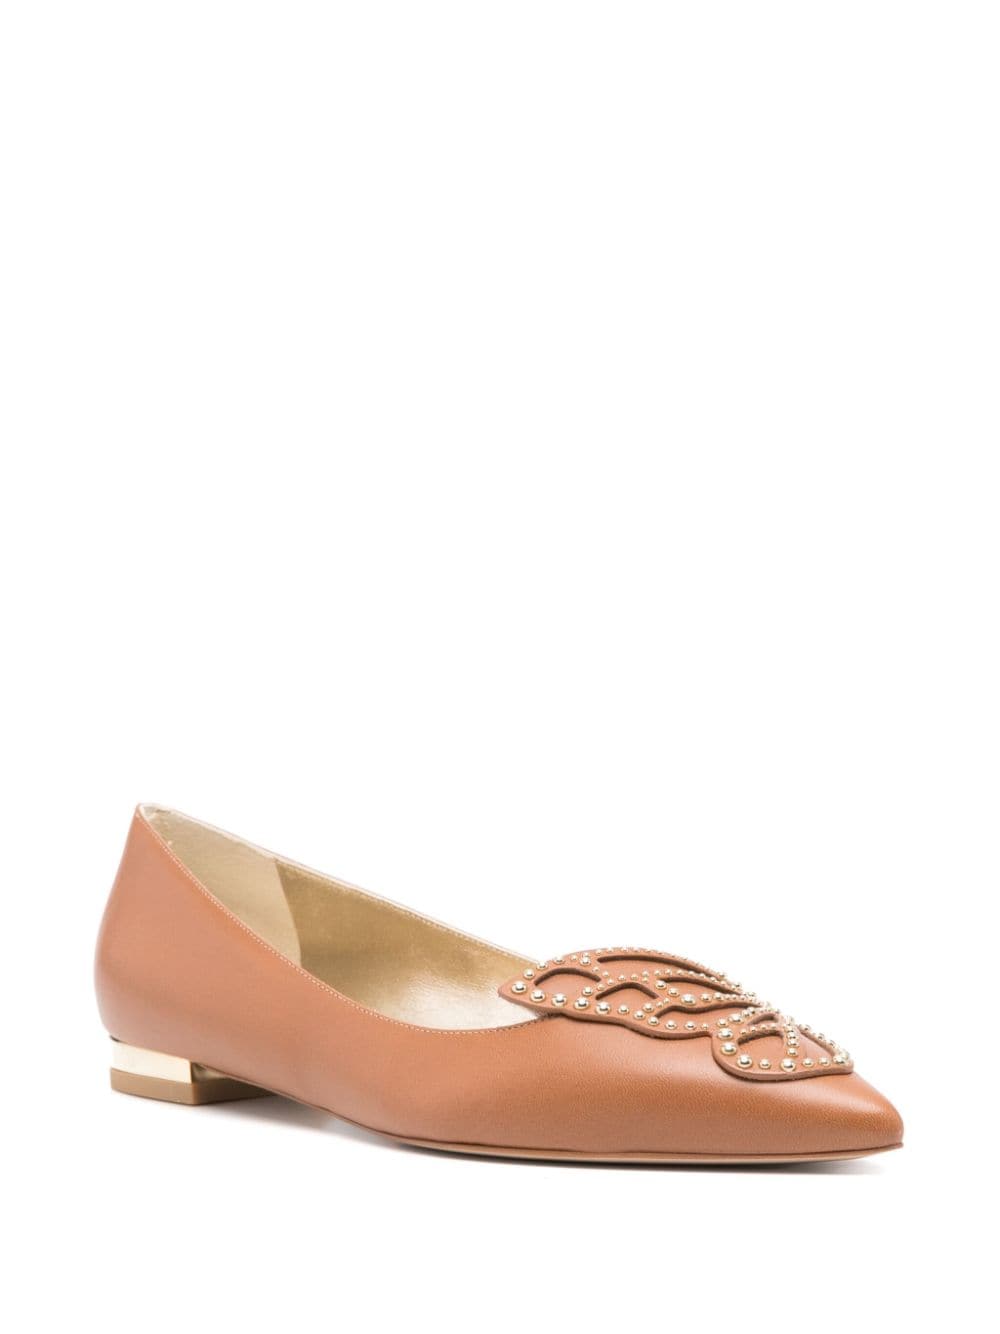 Sophia Webster Butterfly leather ballerina shoes - Bruin